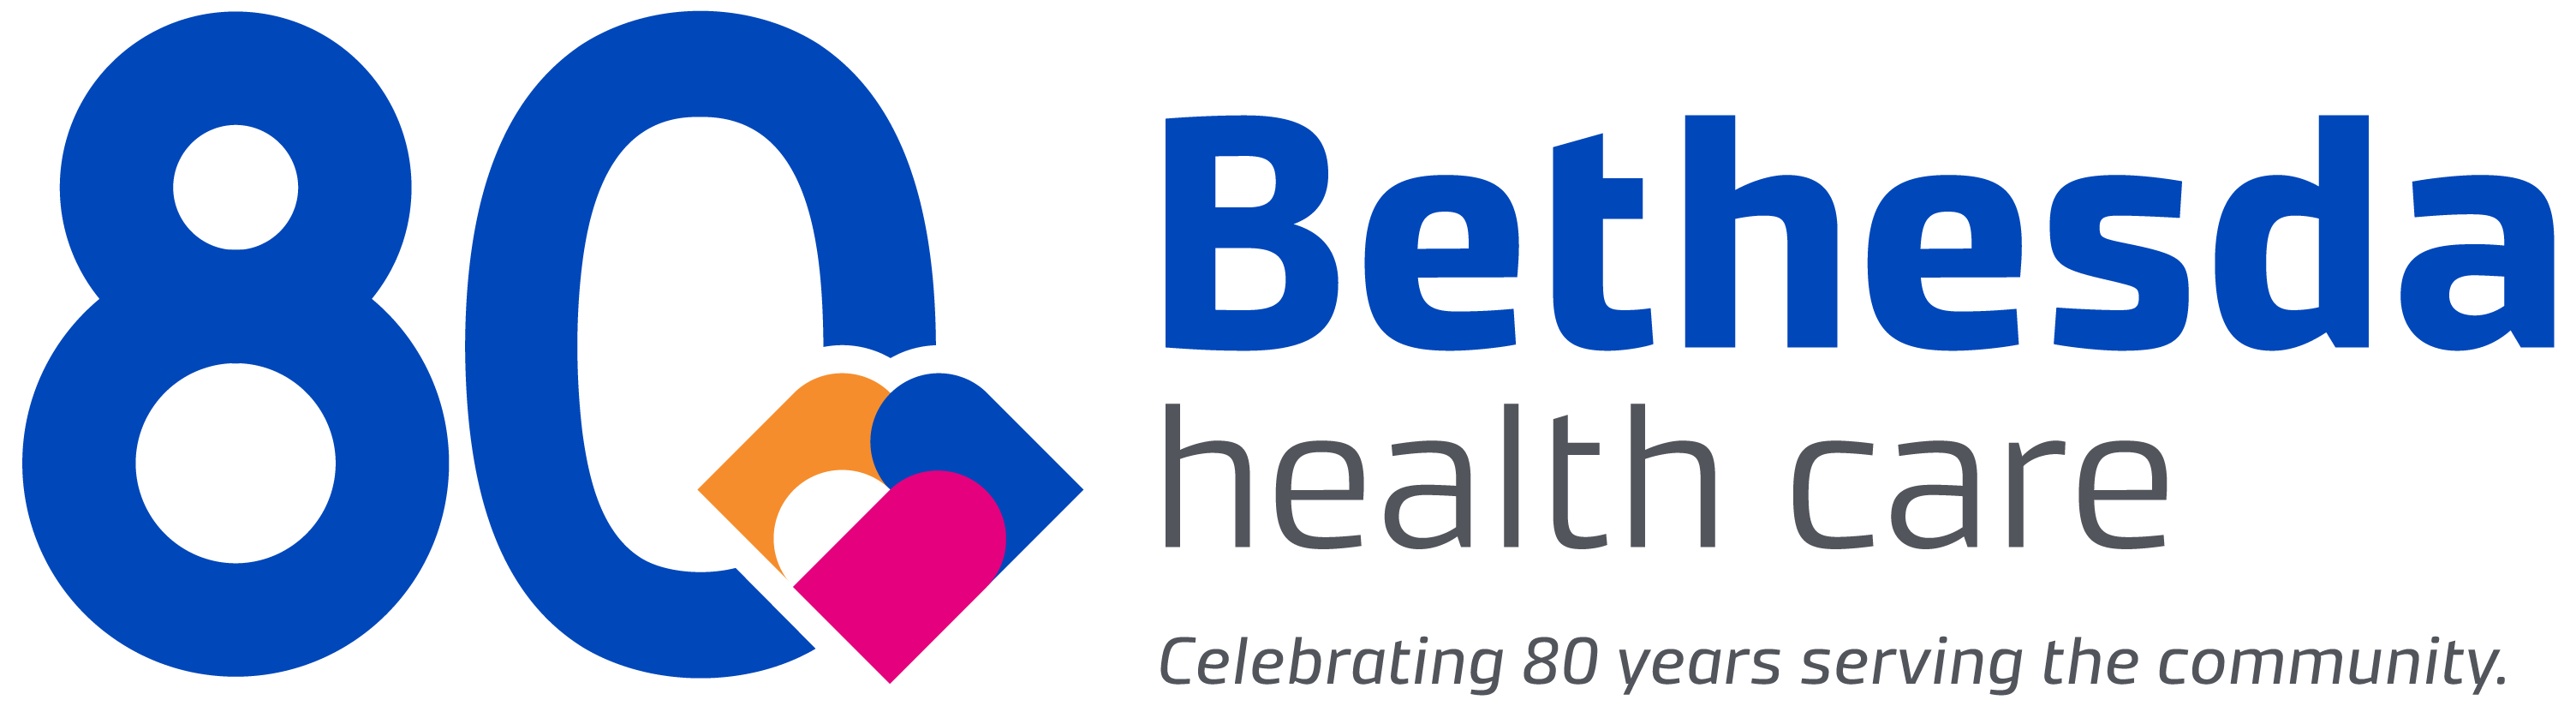 Bethesda Hospital - Perth Radiological Clinic